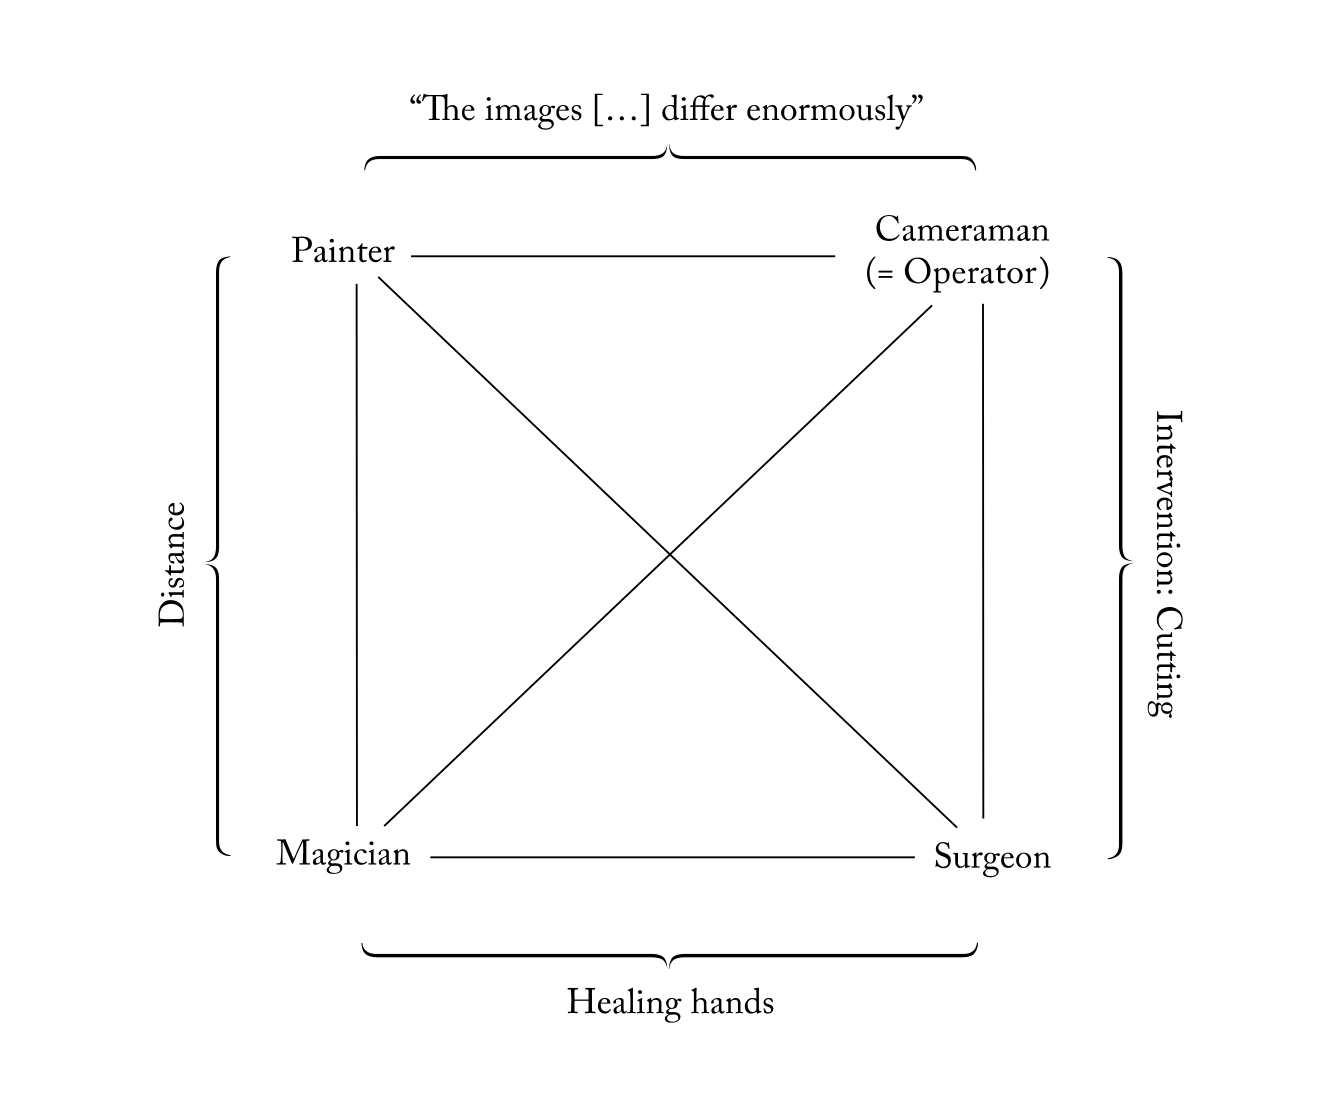 Variation on Greimas’ semiotic square